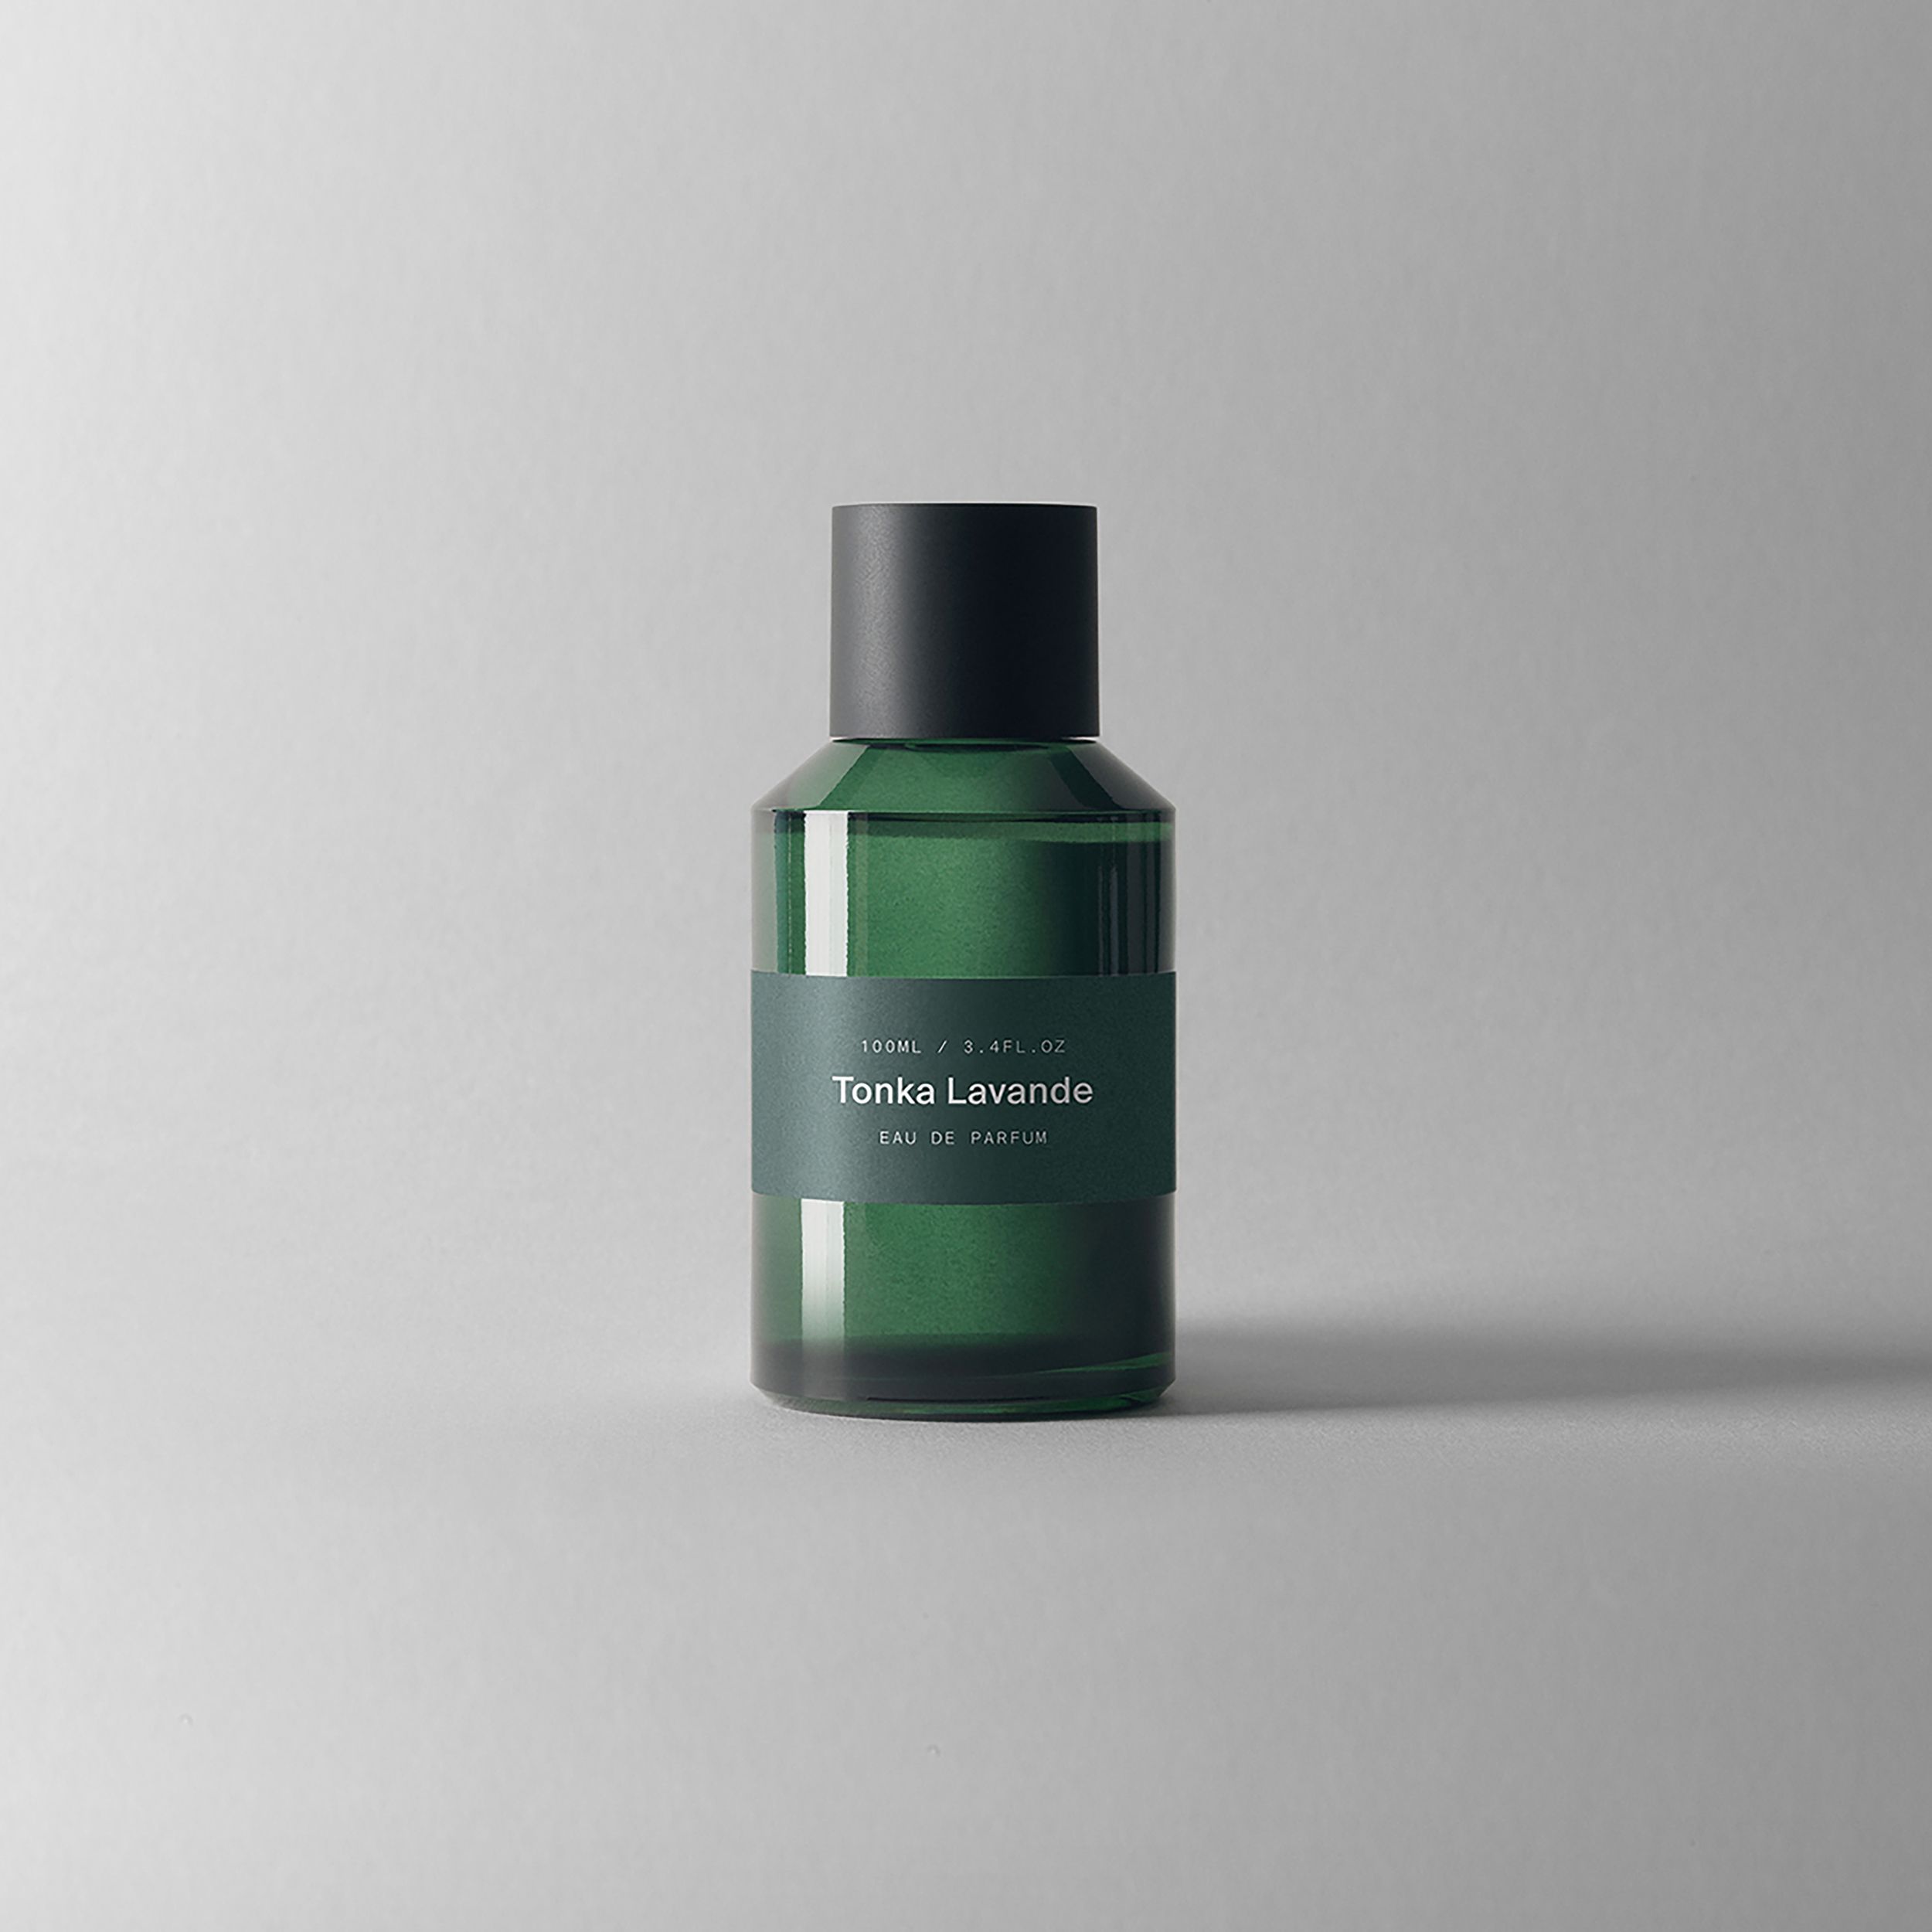 Tonka Lavande Marie Jeanne perfume - a fragrance for women and men 2021